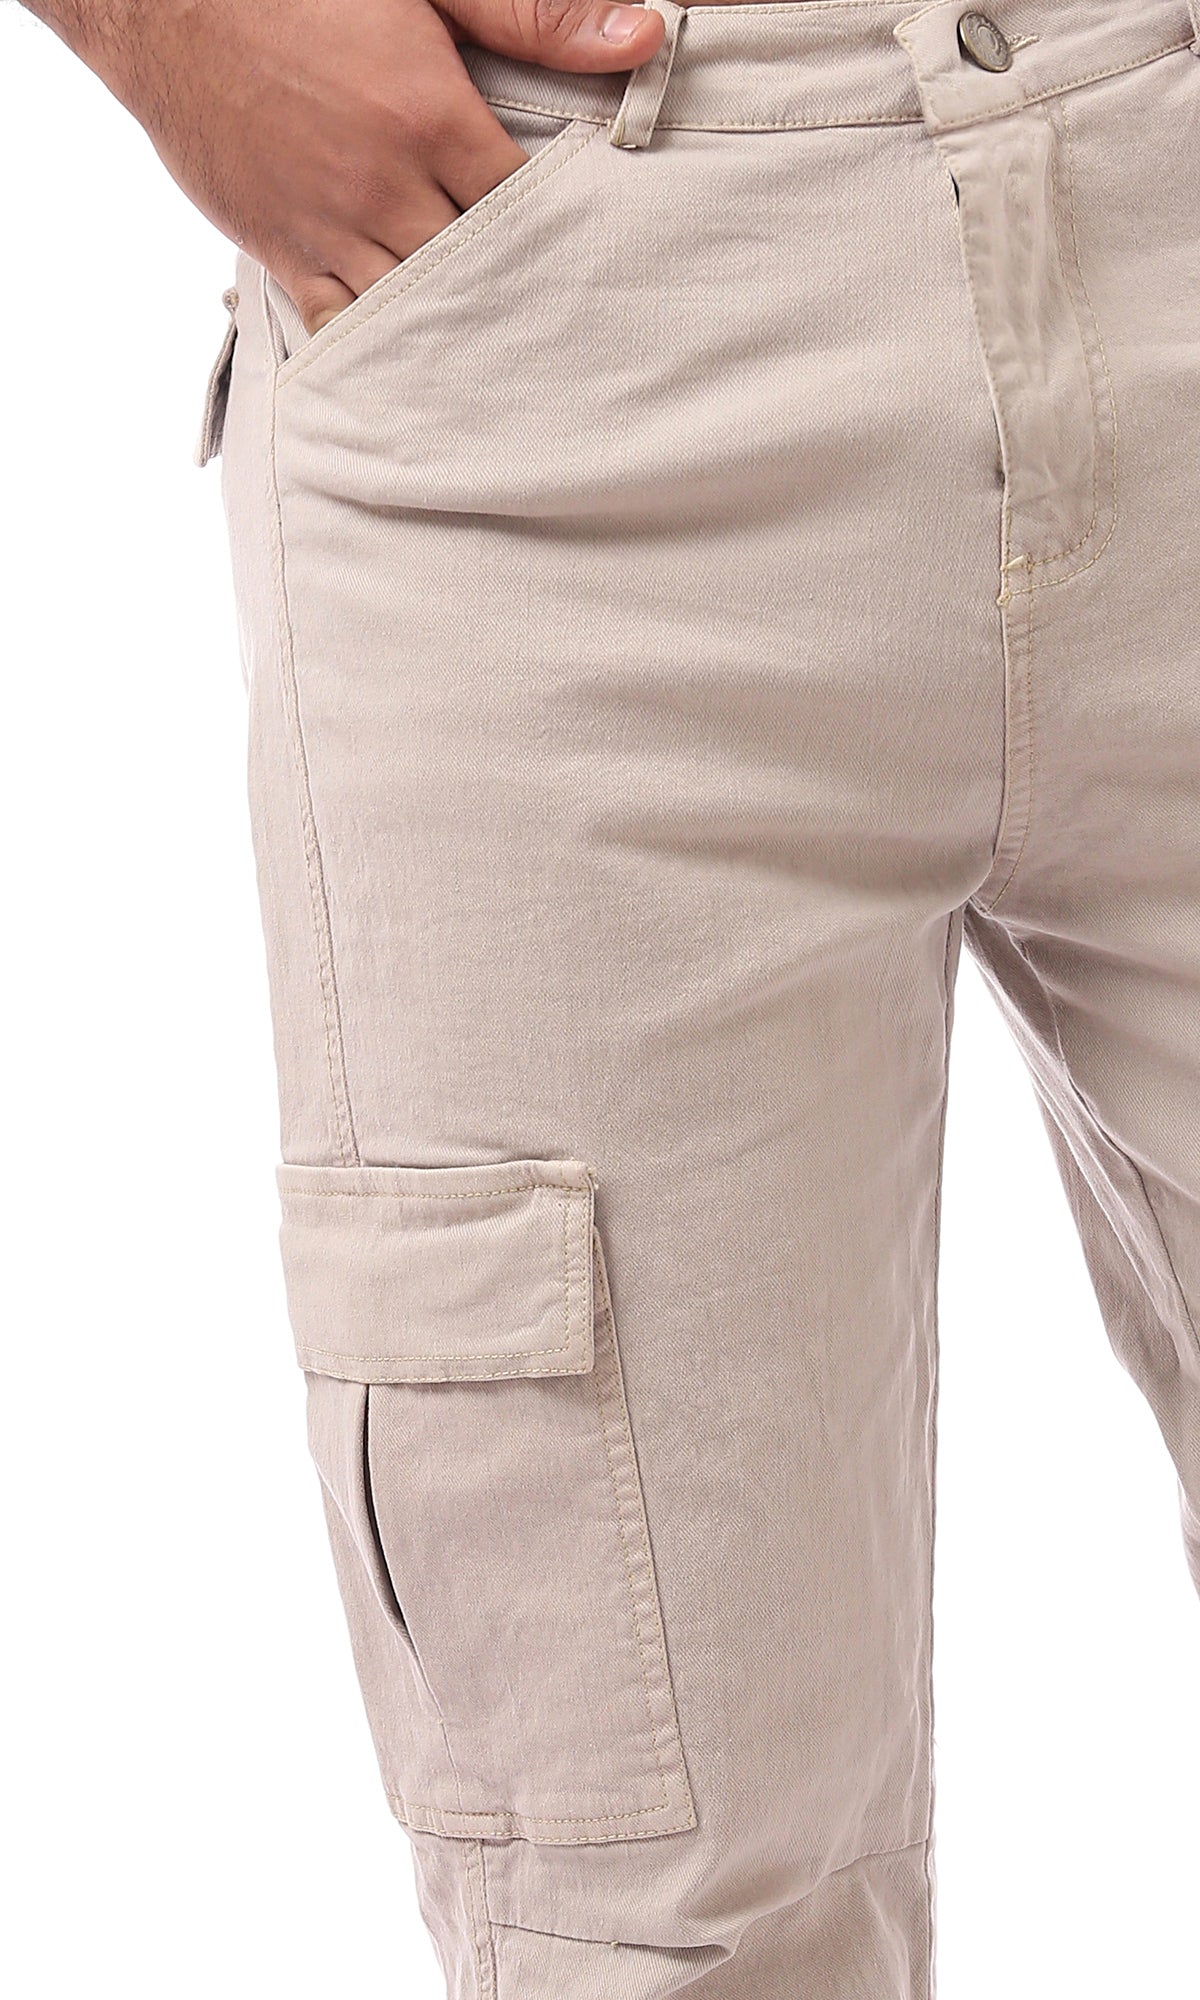 O167940 Multi-Pockets Casual Beige Cargo Pants